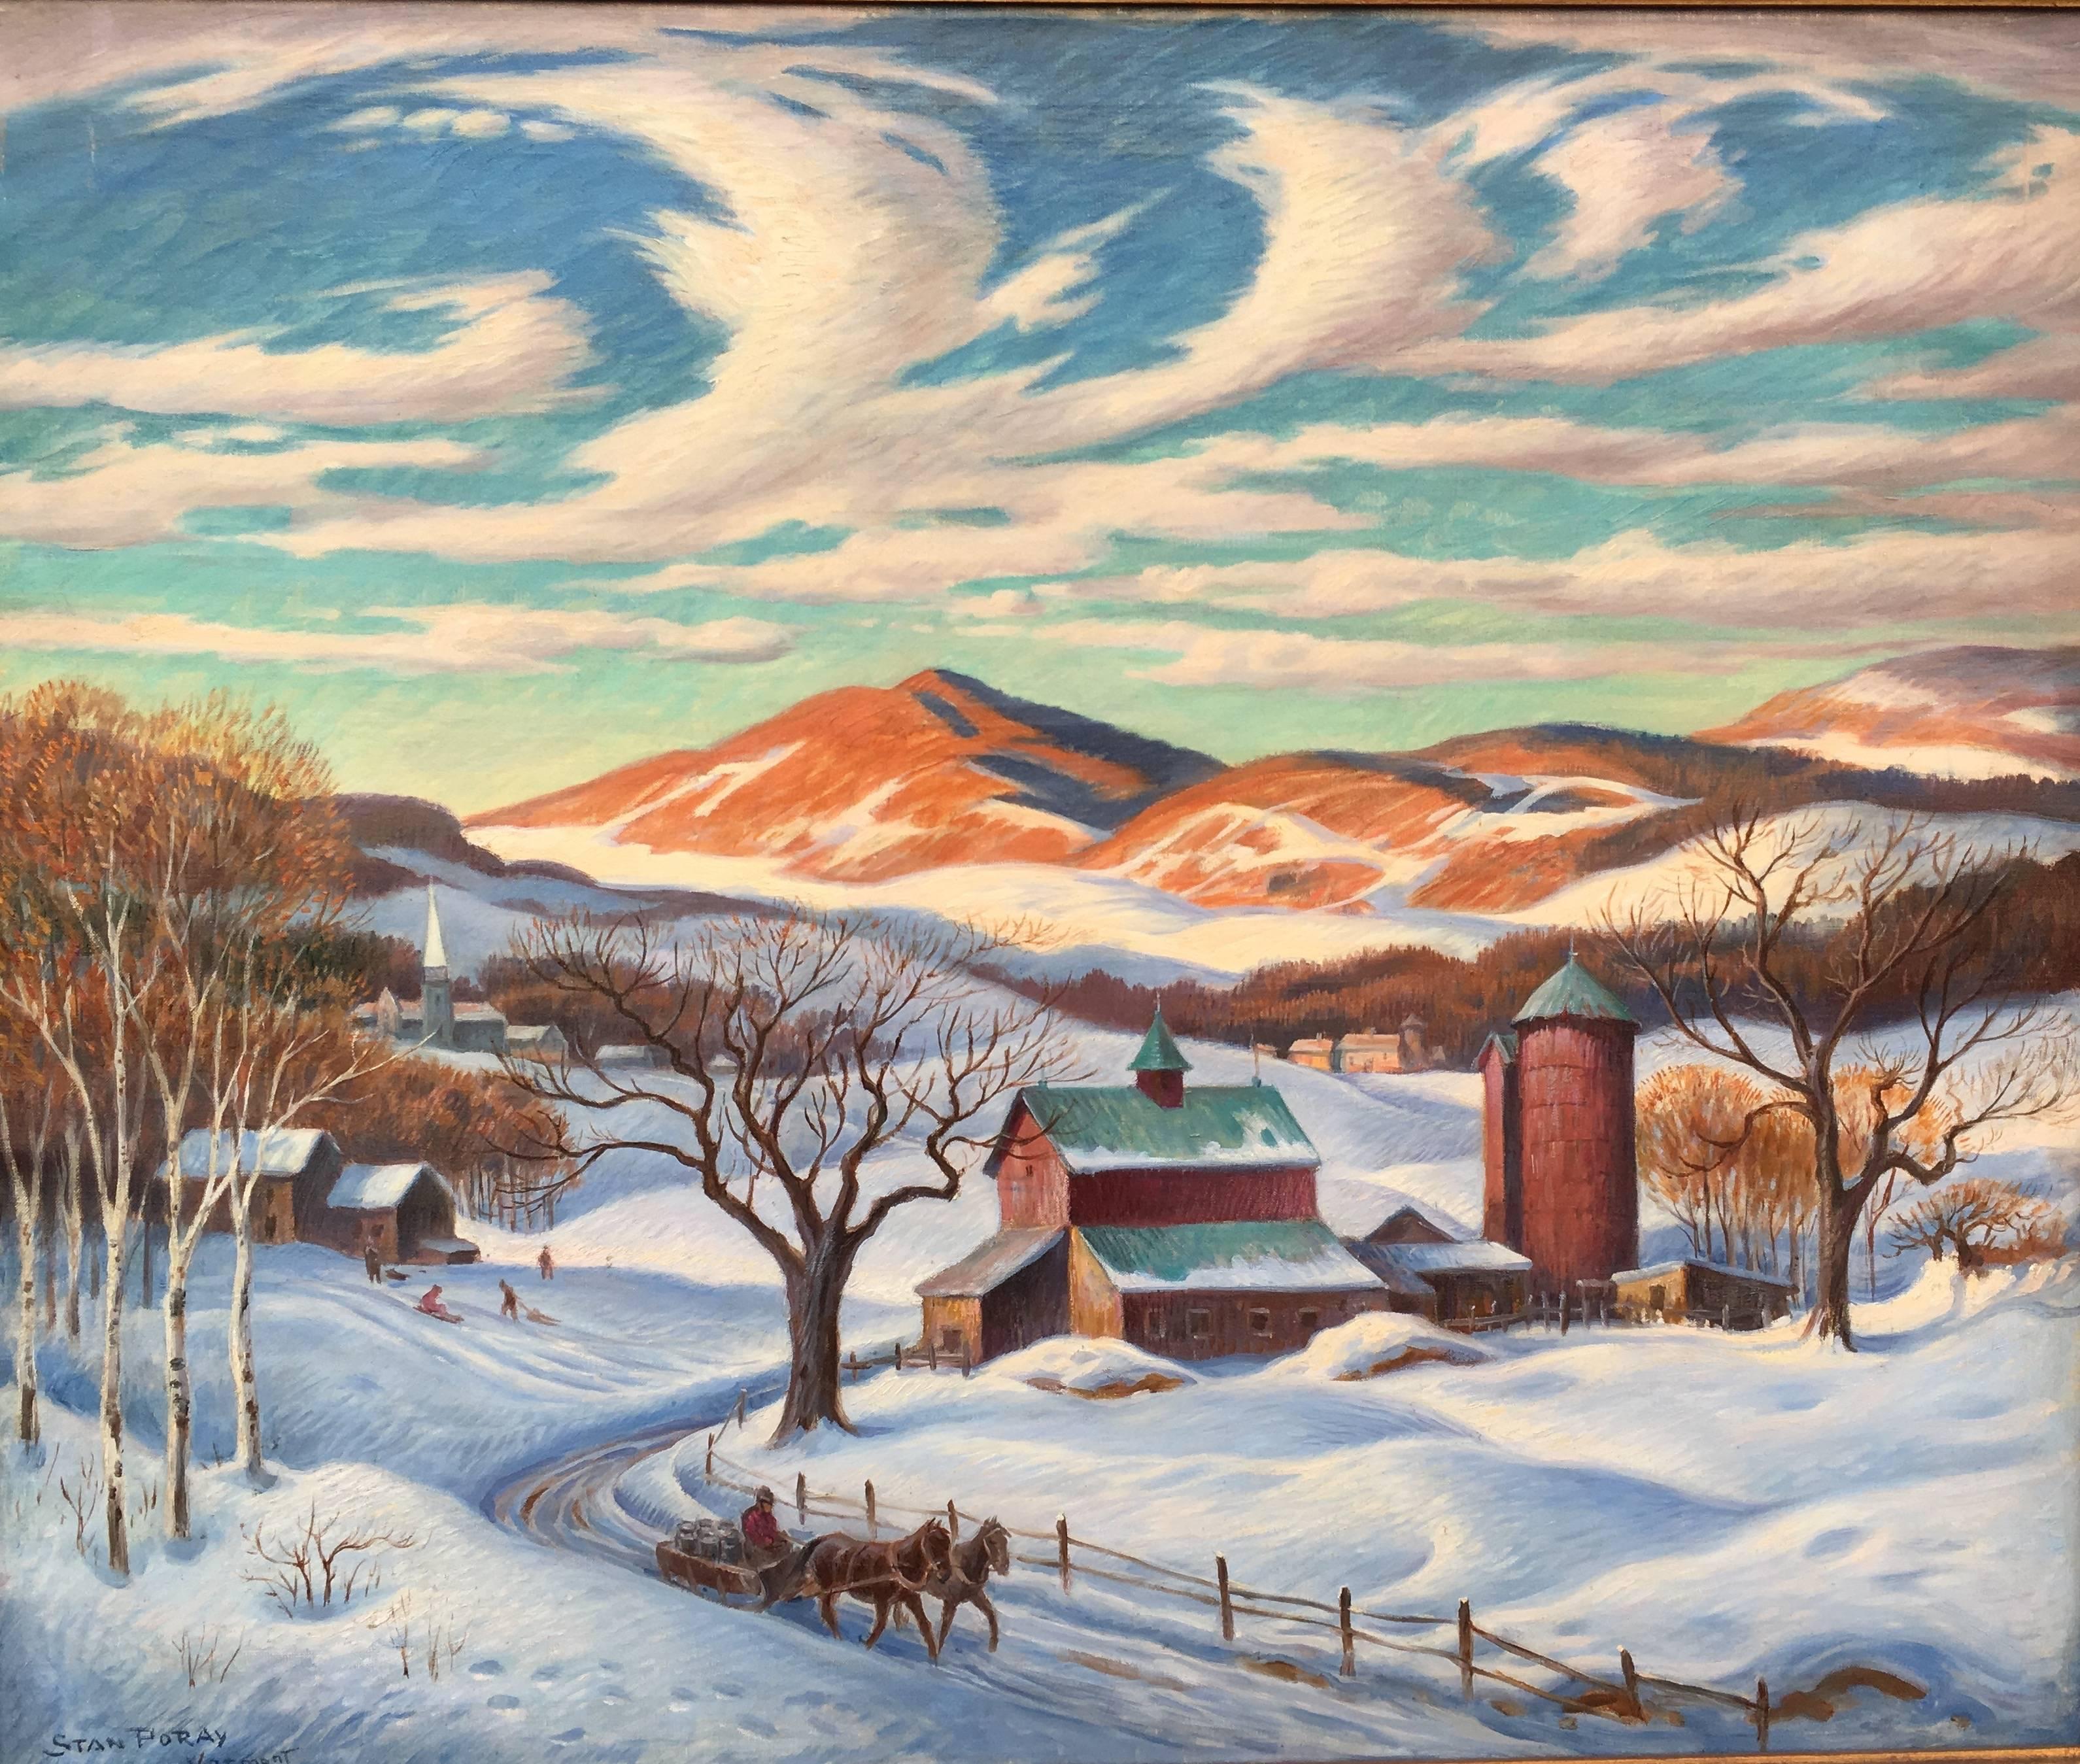 Stan Poray Landscape Painting - The Neighbor's Farm